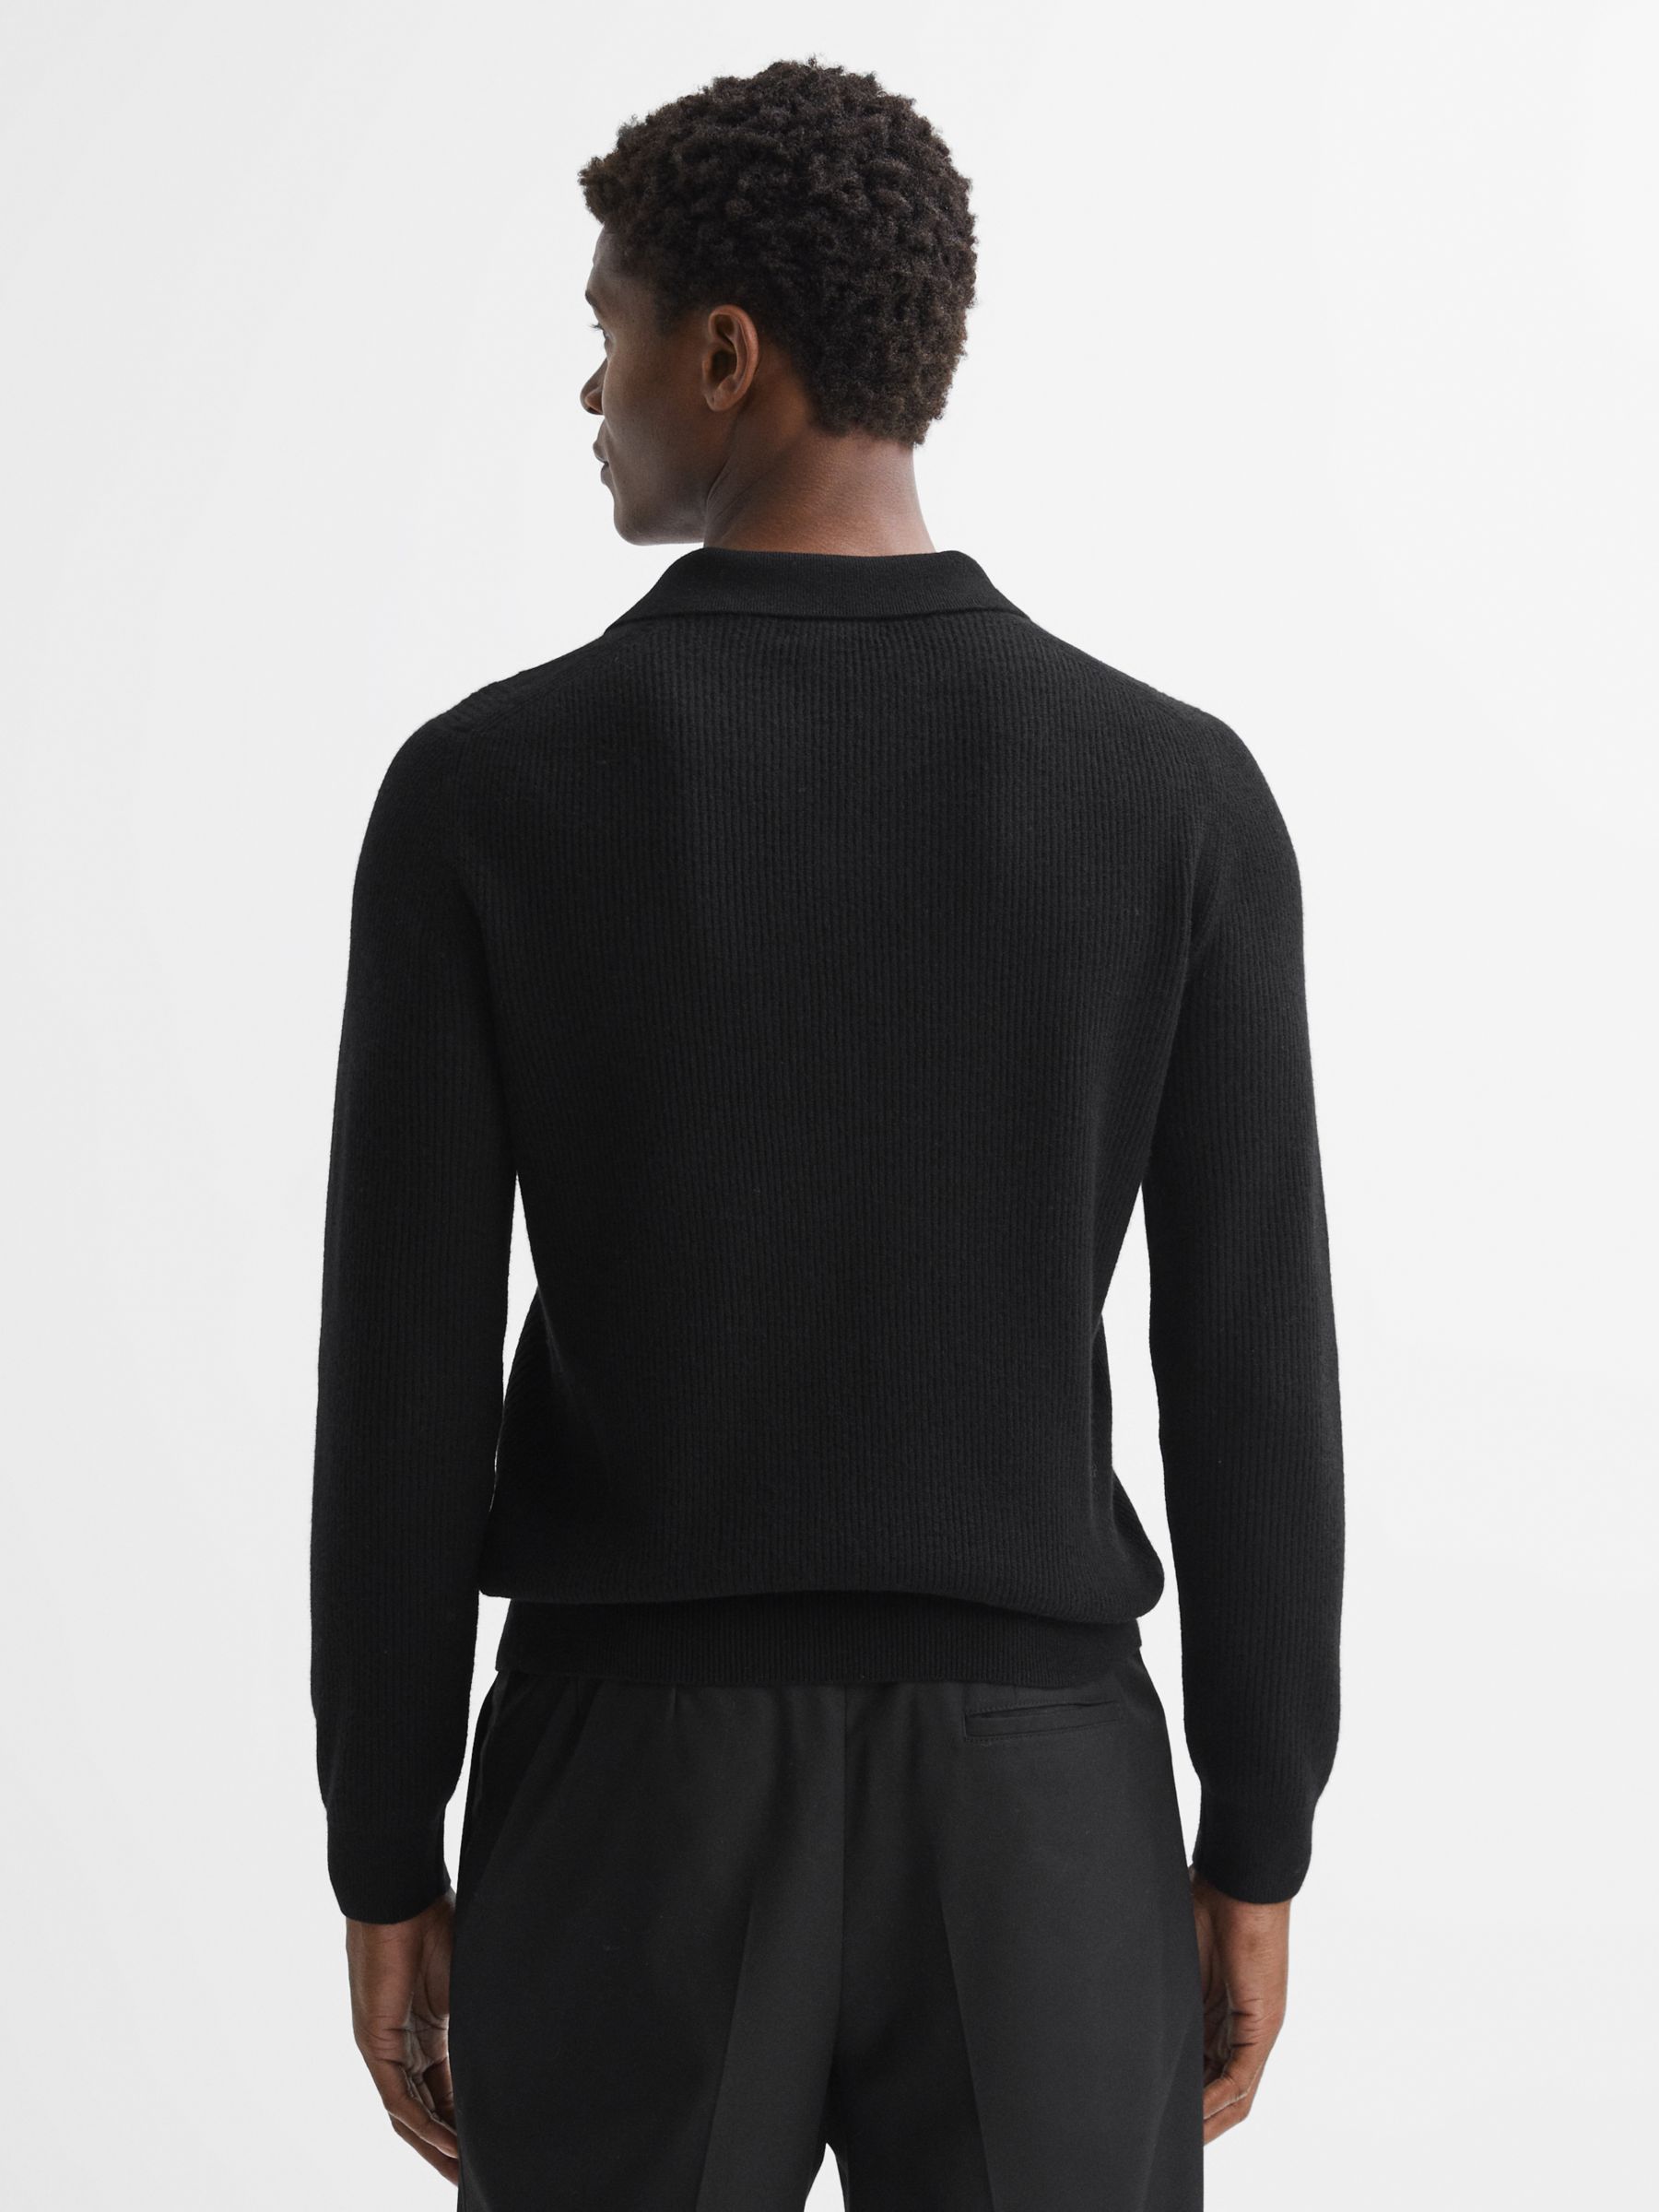 Reiss Malik Long Sleeve Knitted Polo Shirt, Black, S